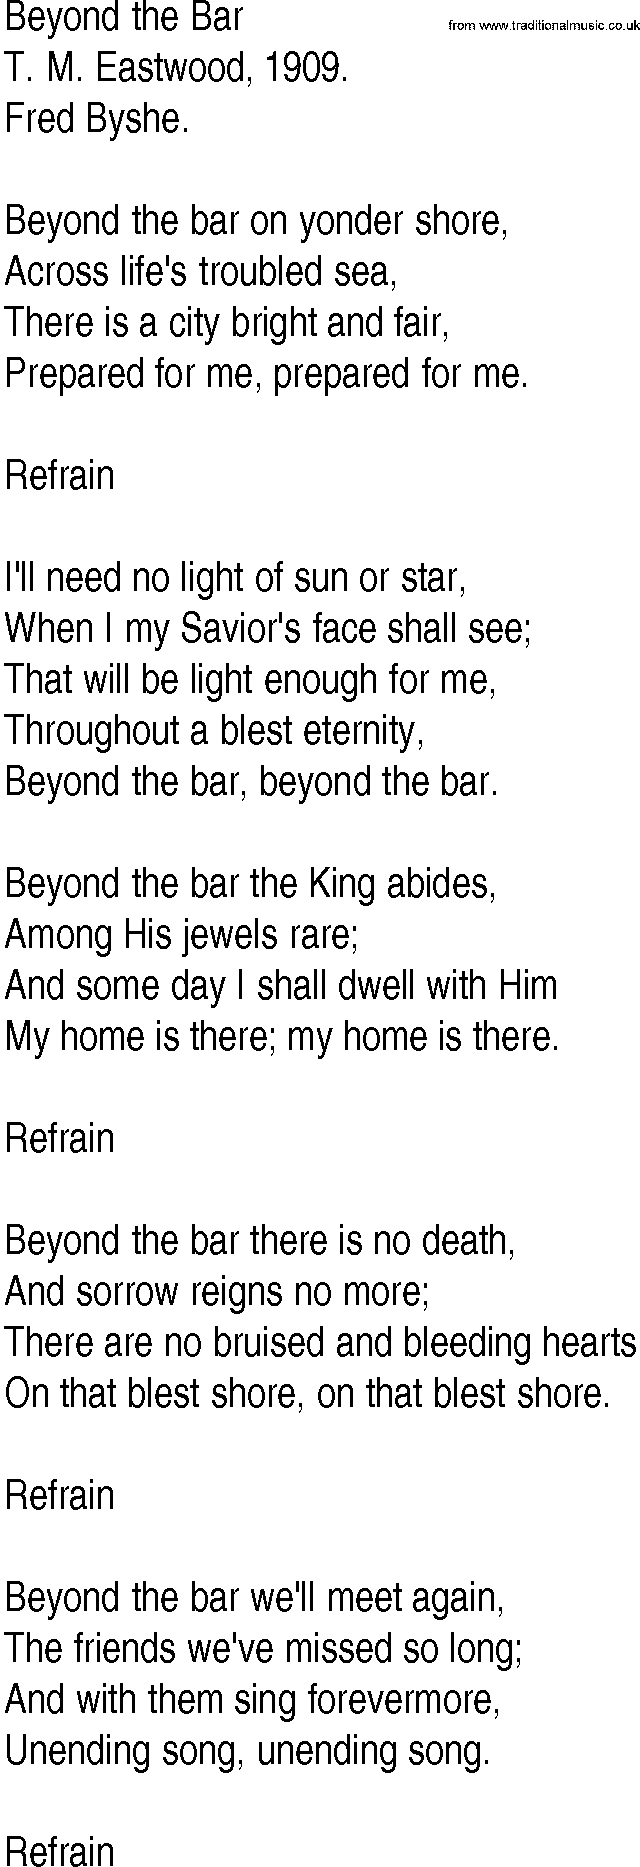 Hymn and Gospel Song: Beyond the Bar by T M Eastwood lyrics